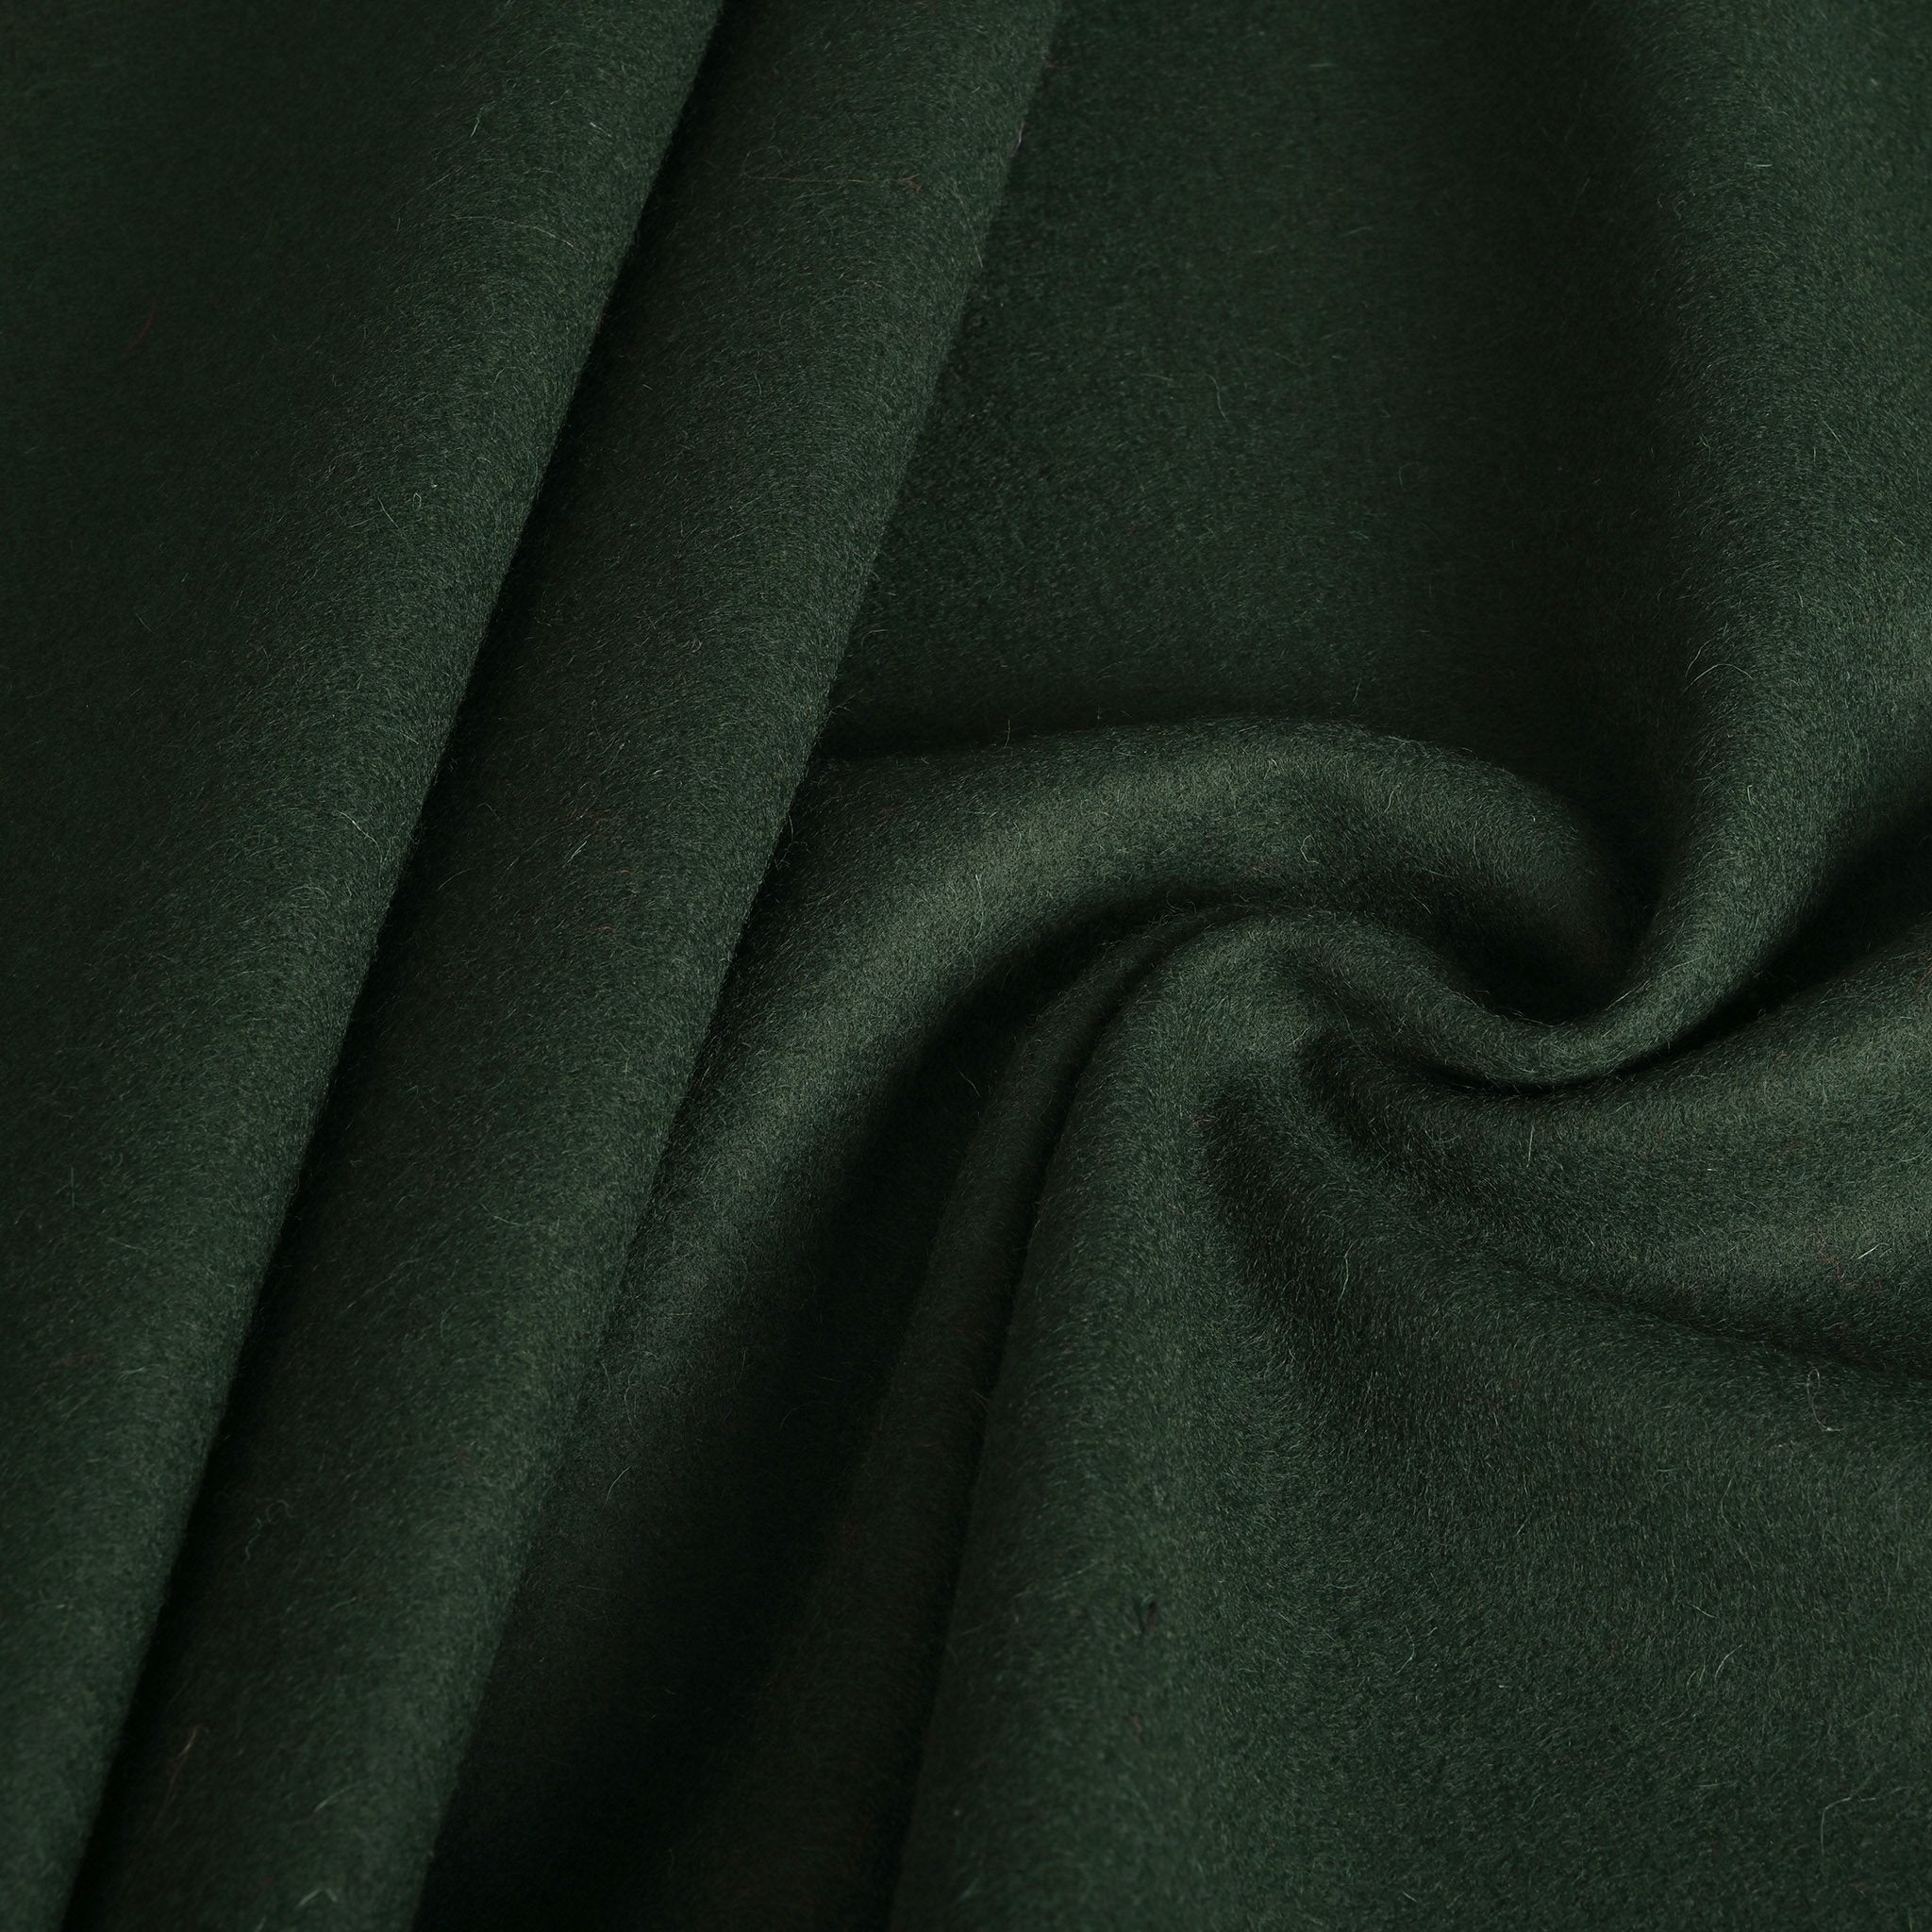 Olive Green Melton Fabric 4582